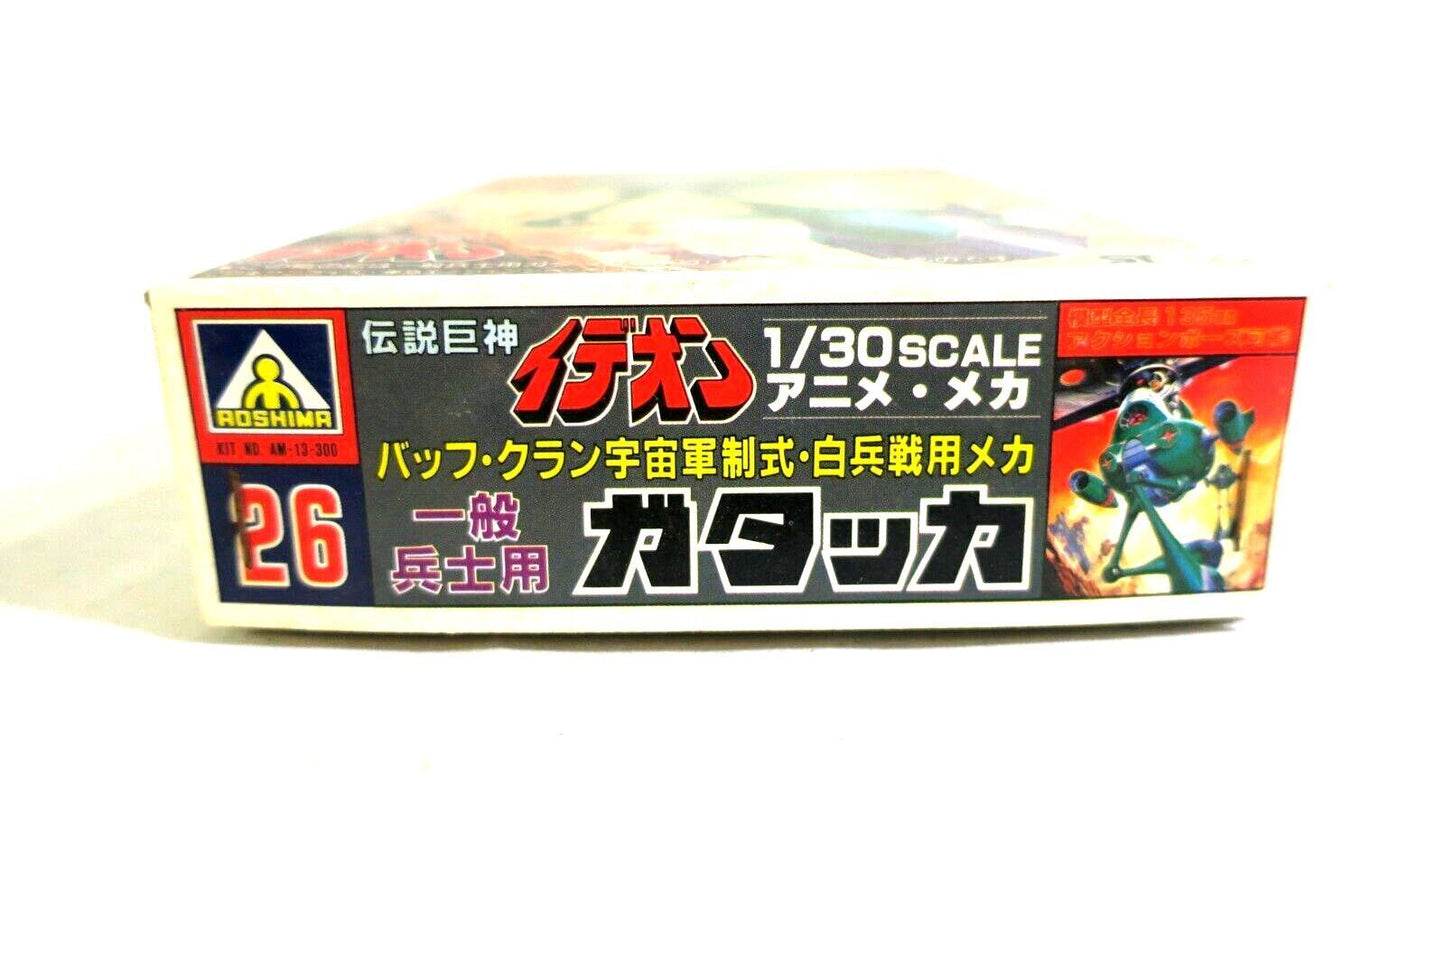 Aoshima IDEON Gadakka Model Kit 1:30 Green Gattacar Model Kit 26 TM-13-300 E7